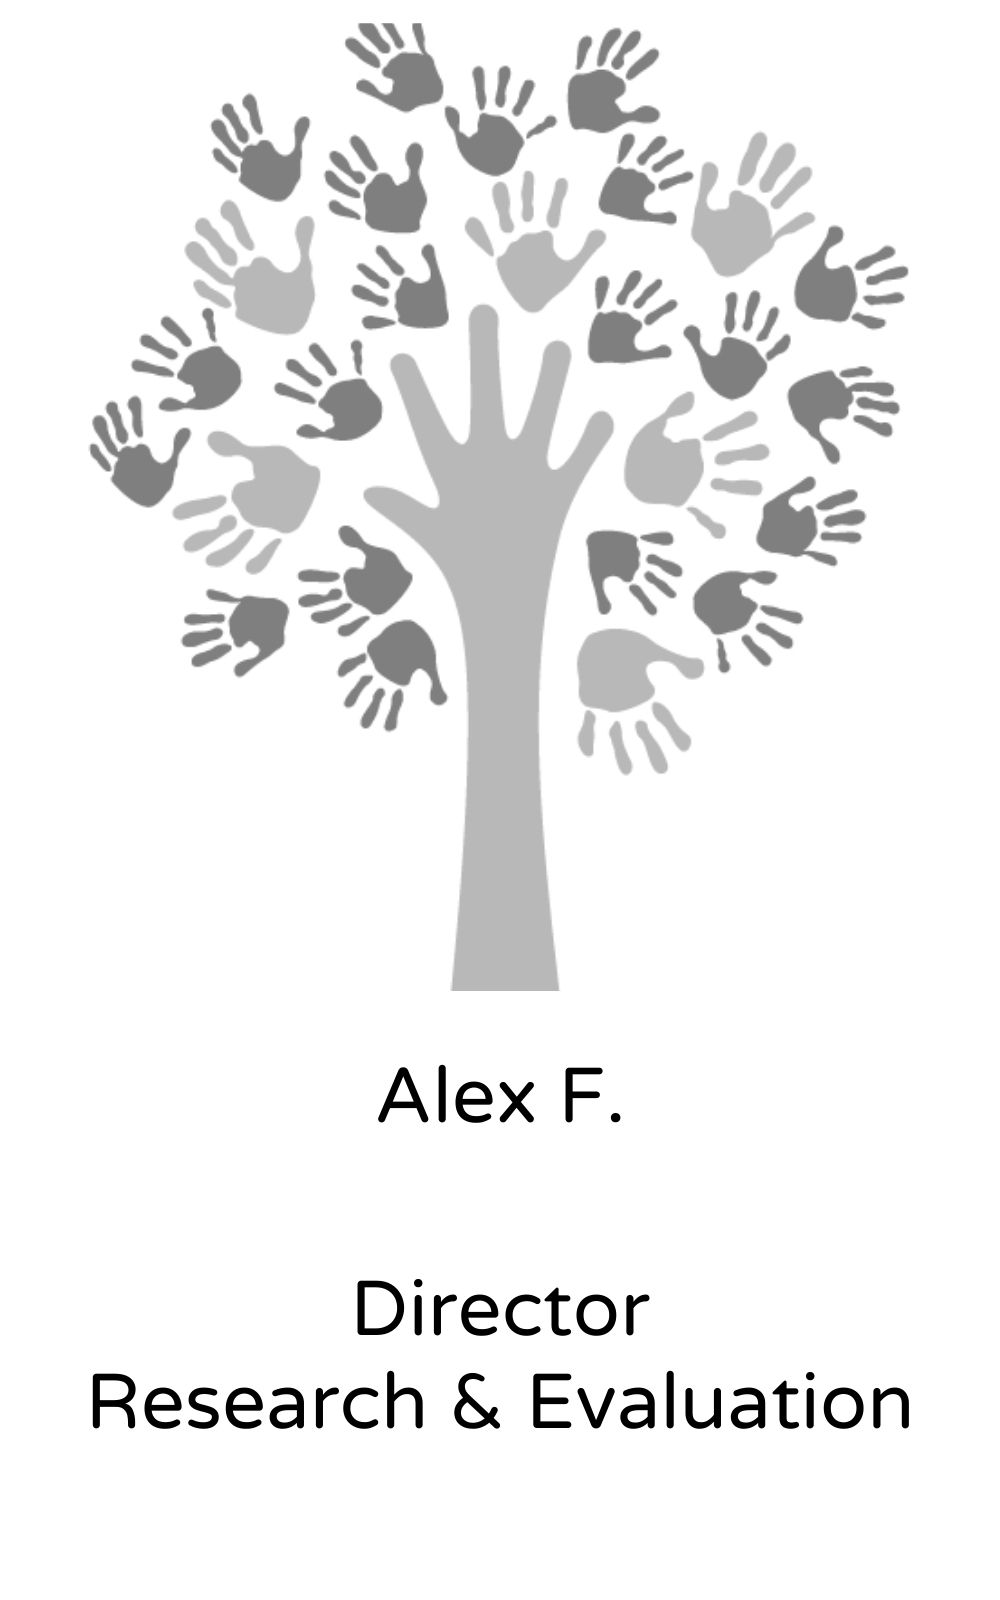 Alex F, Director, Research & Evaluation